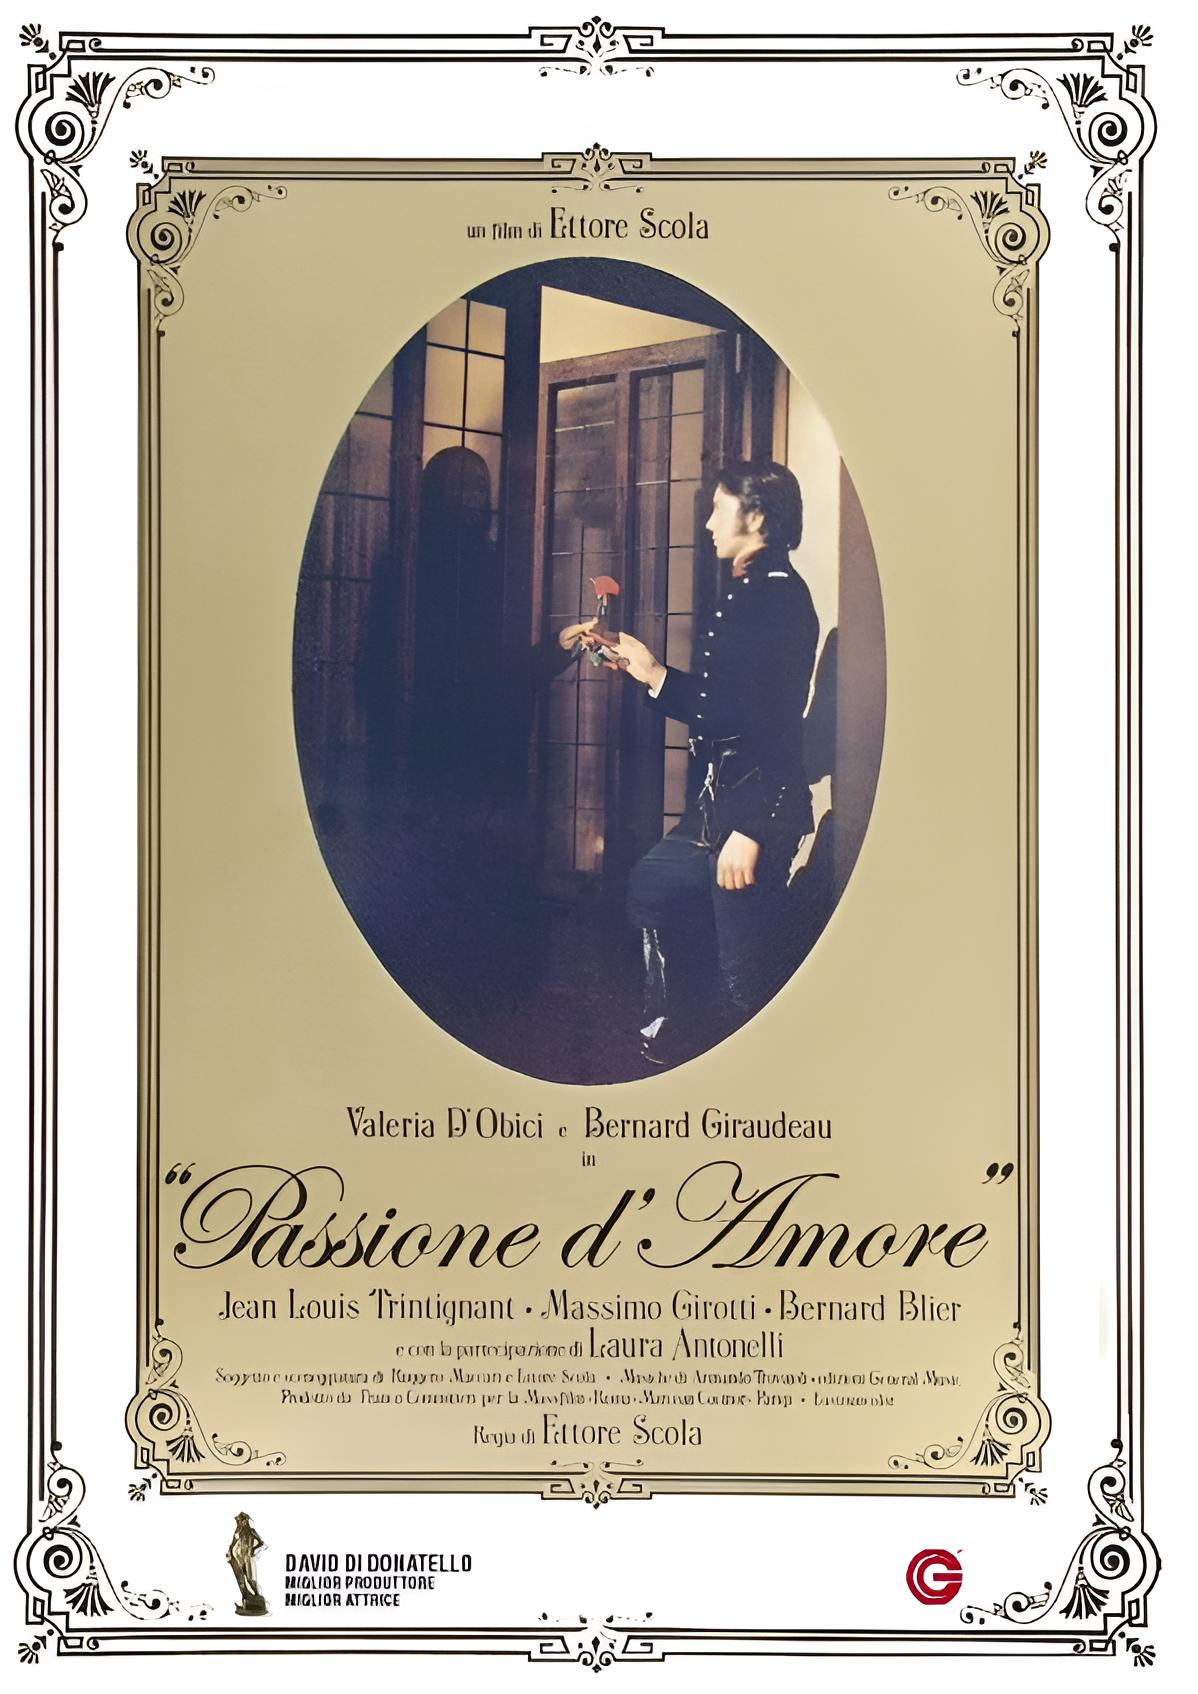 Passione d’amore (1981)